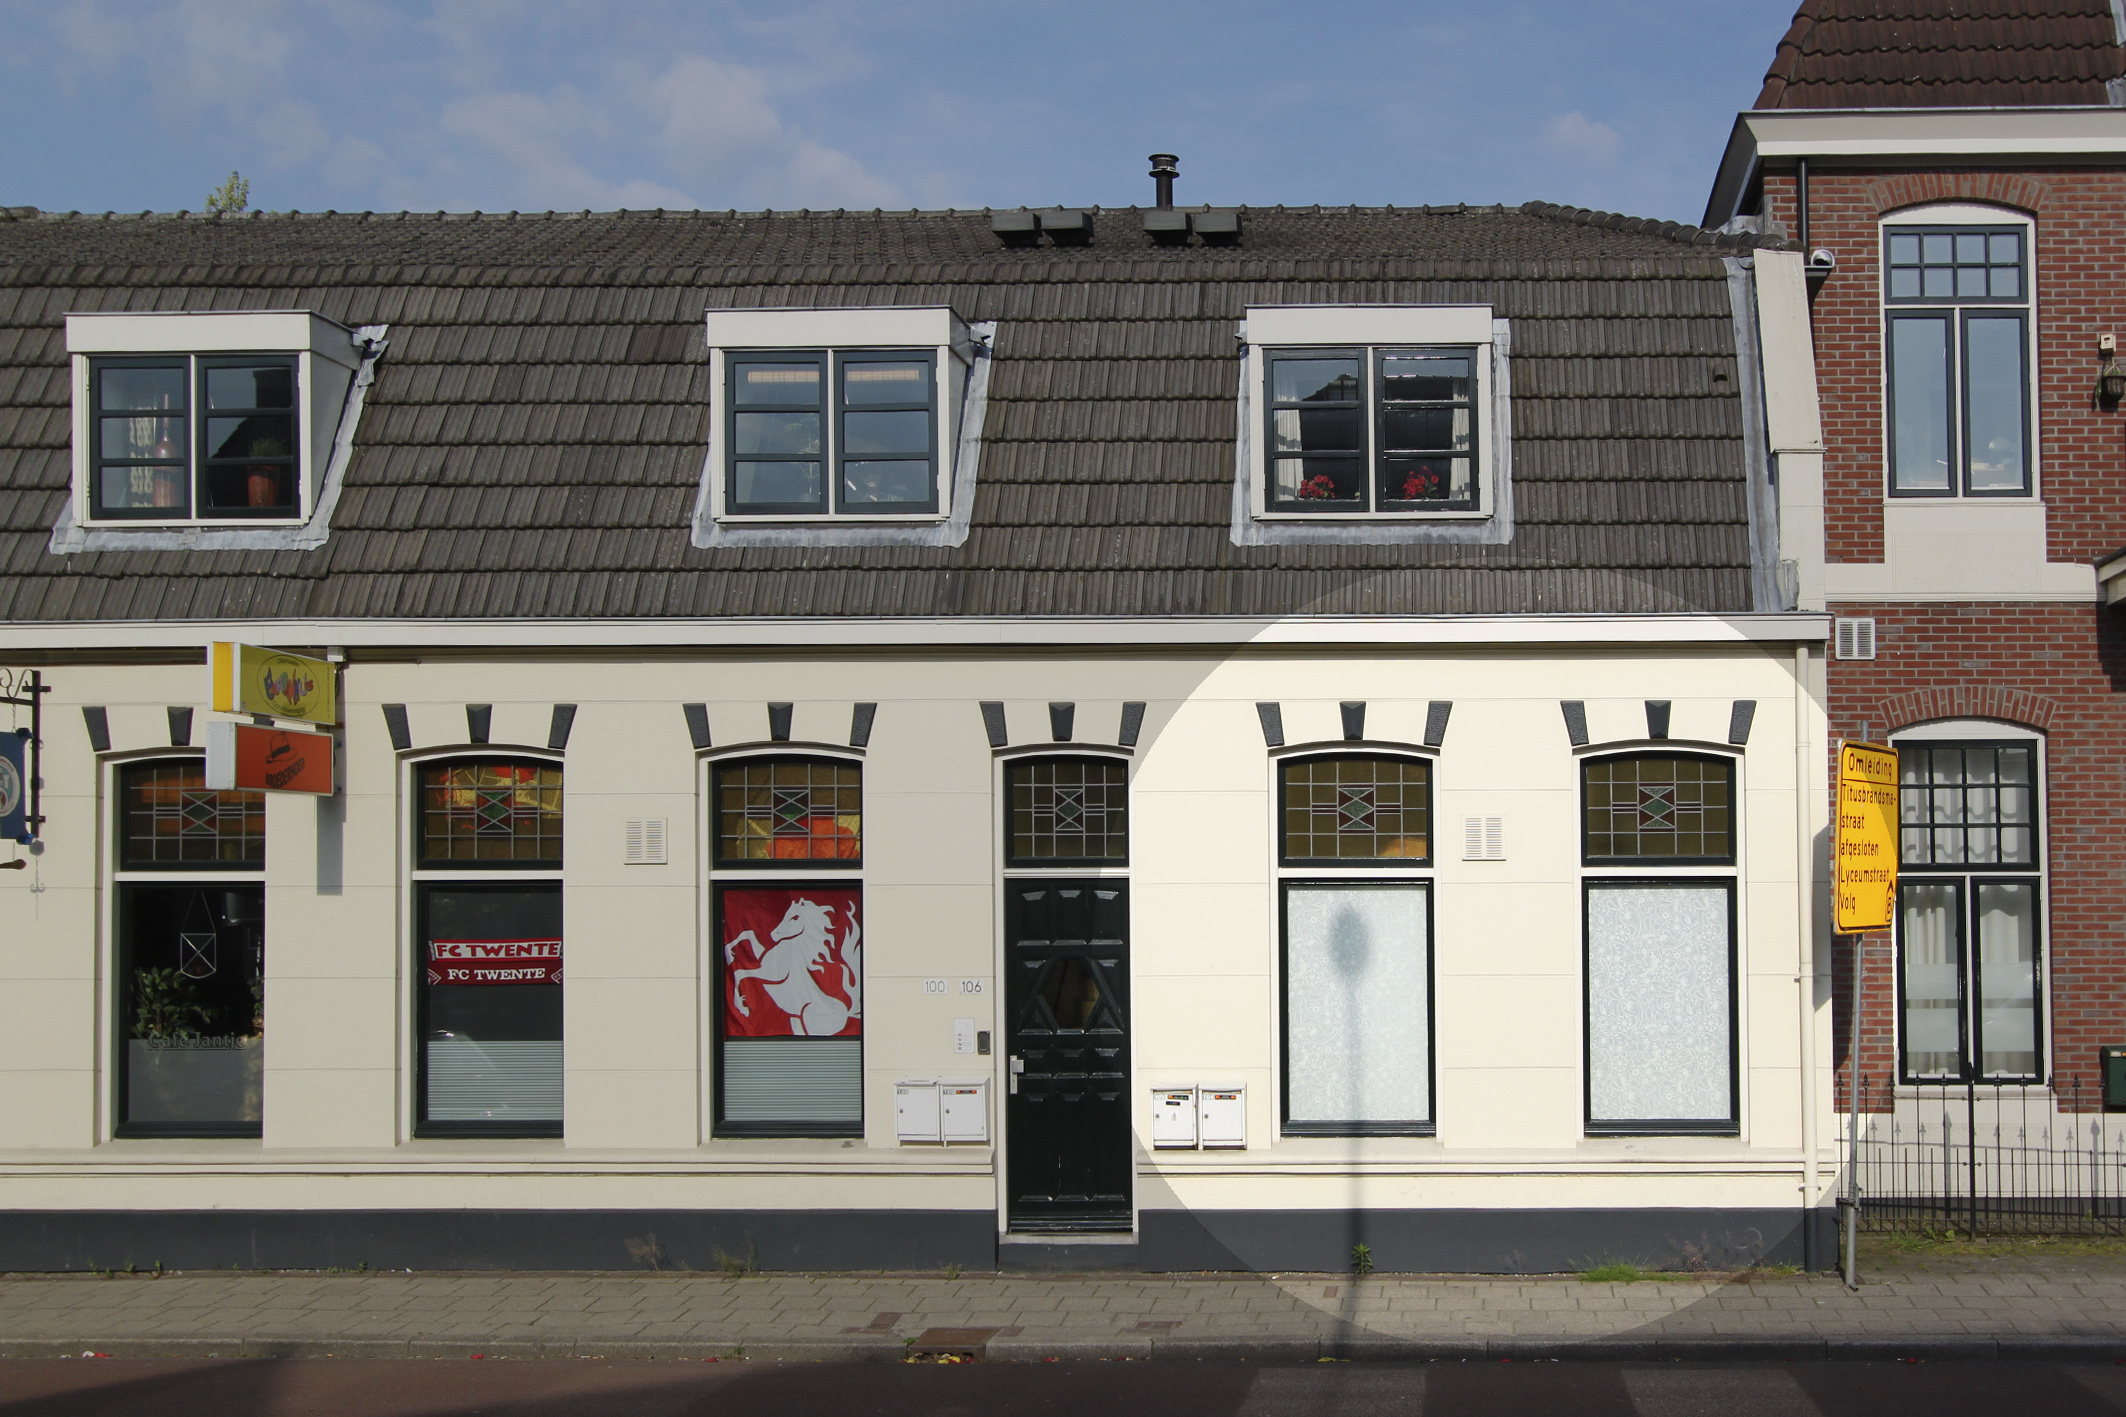 Steenstraat 100, 7571 BH Oldenzaal, Nederland